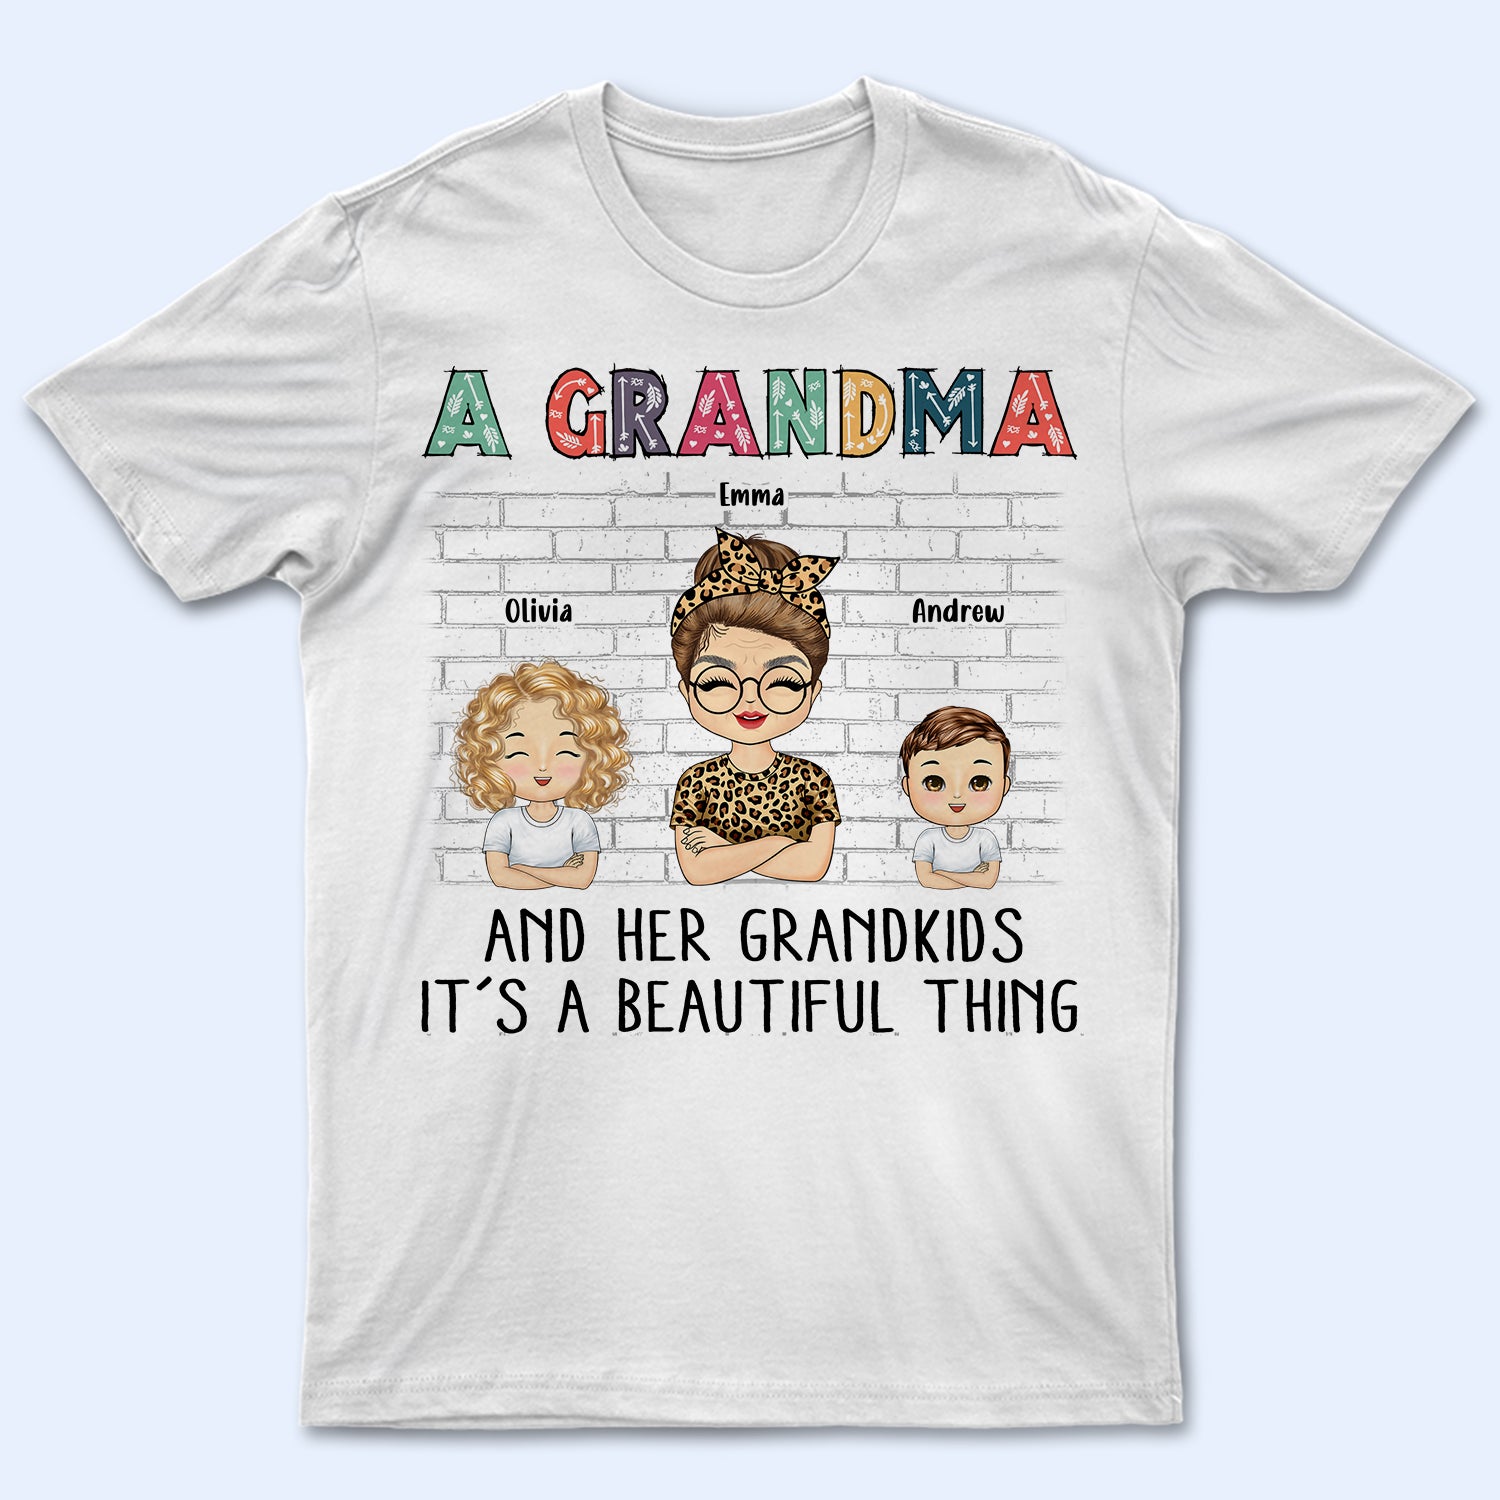 Grandma And Grandkids Beautiful Thing - Birthday, Loving Gift For Mom, Mother, Nana, Grandmother, Grandparents, Family - Personalized Custom T Shirt